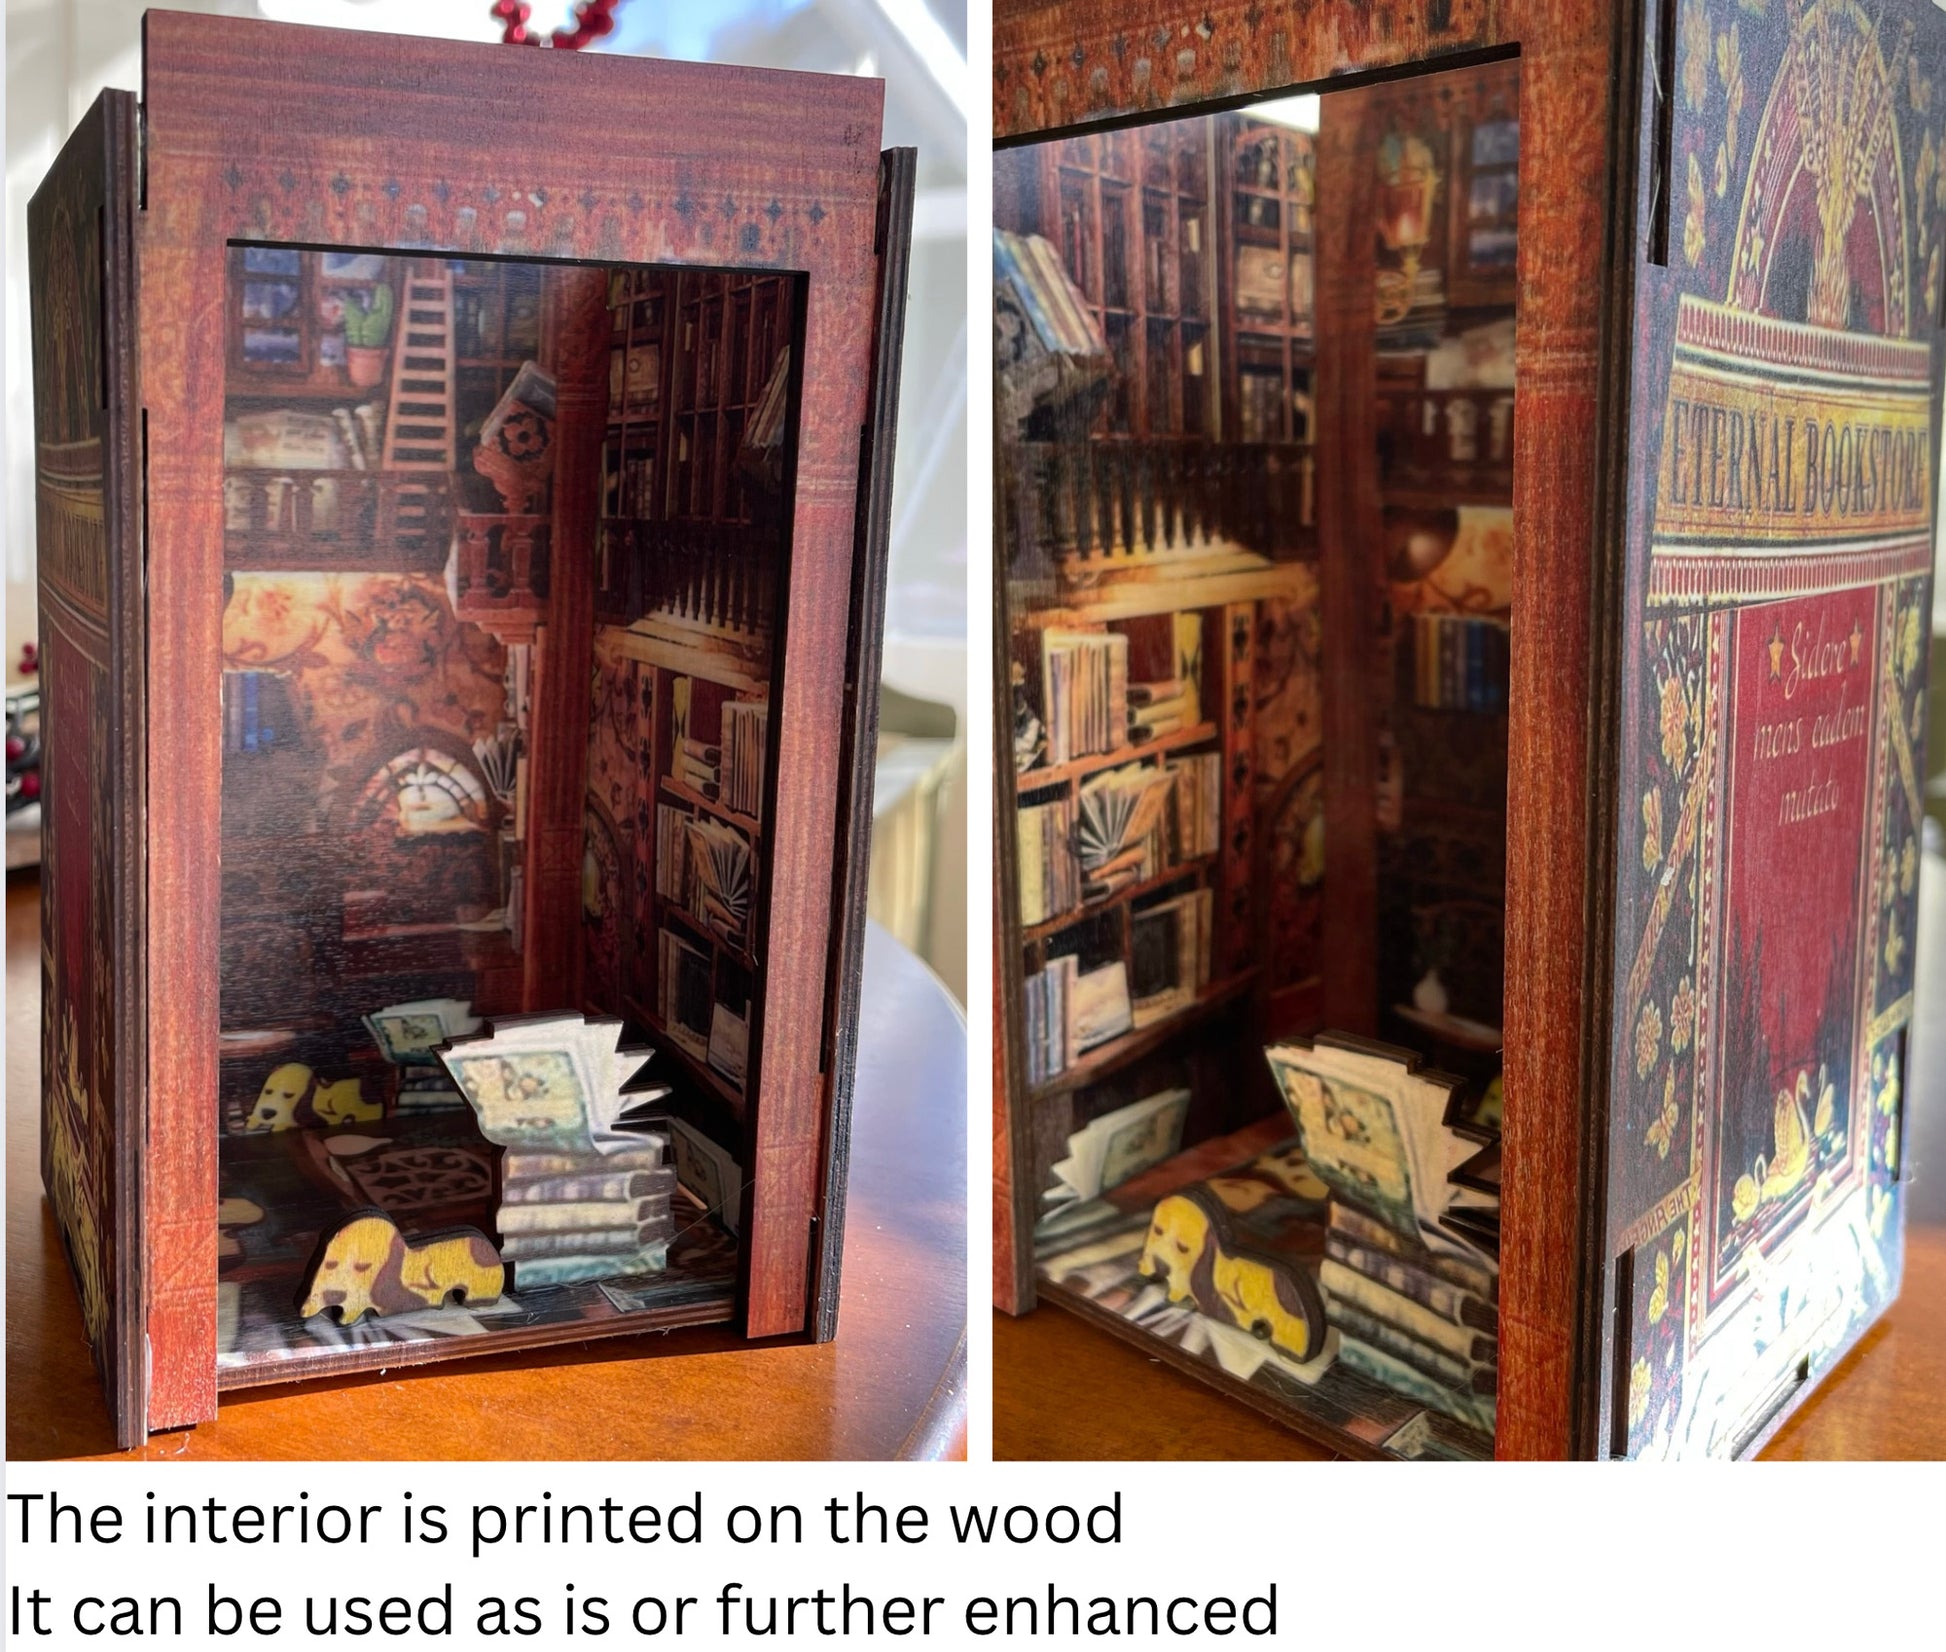 DIY Book Nook Miniature House – The Refined Emporium